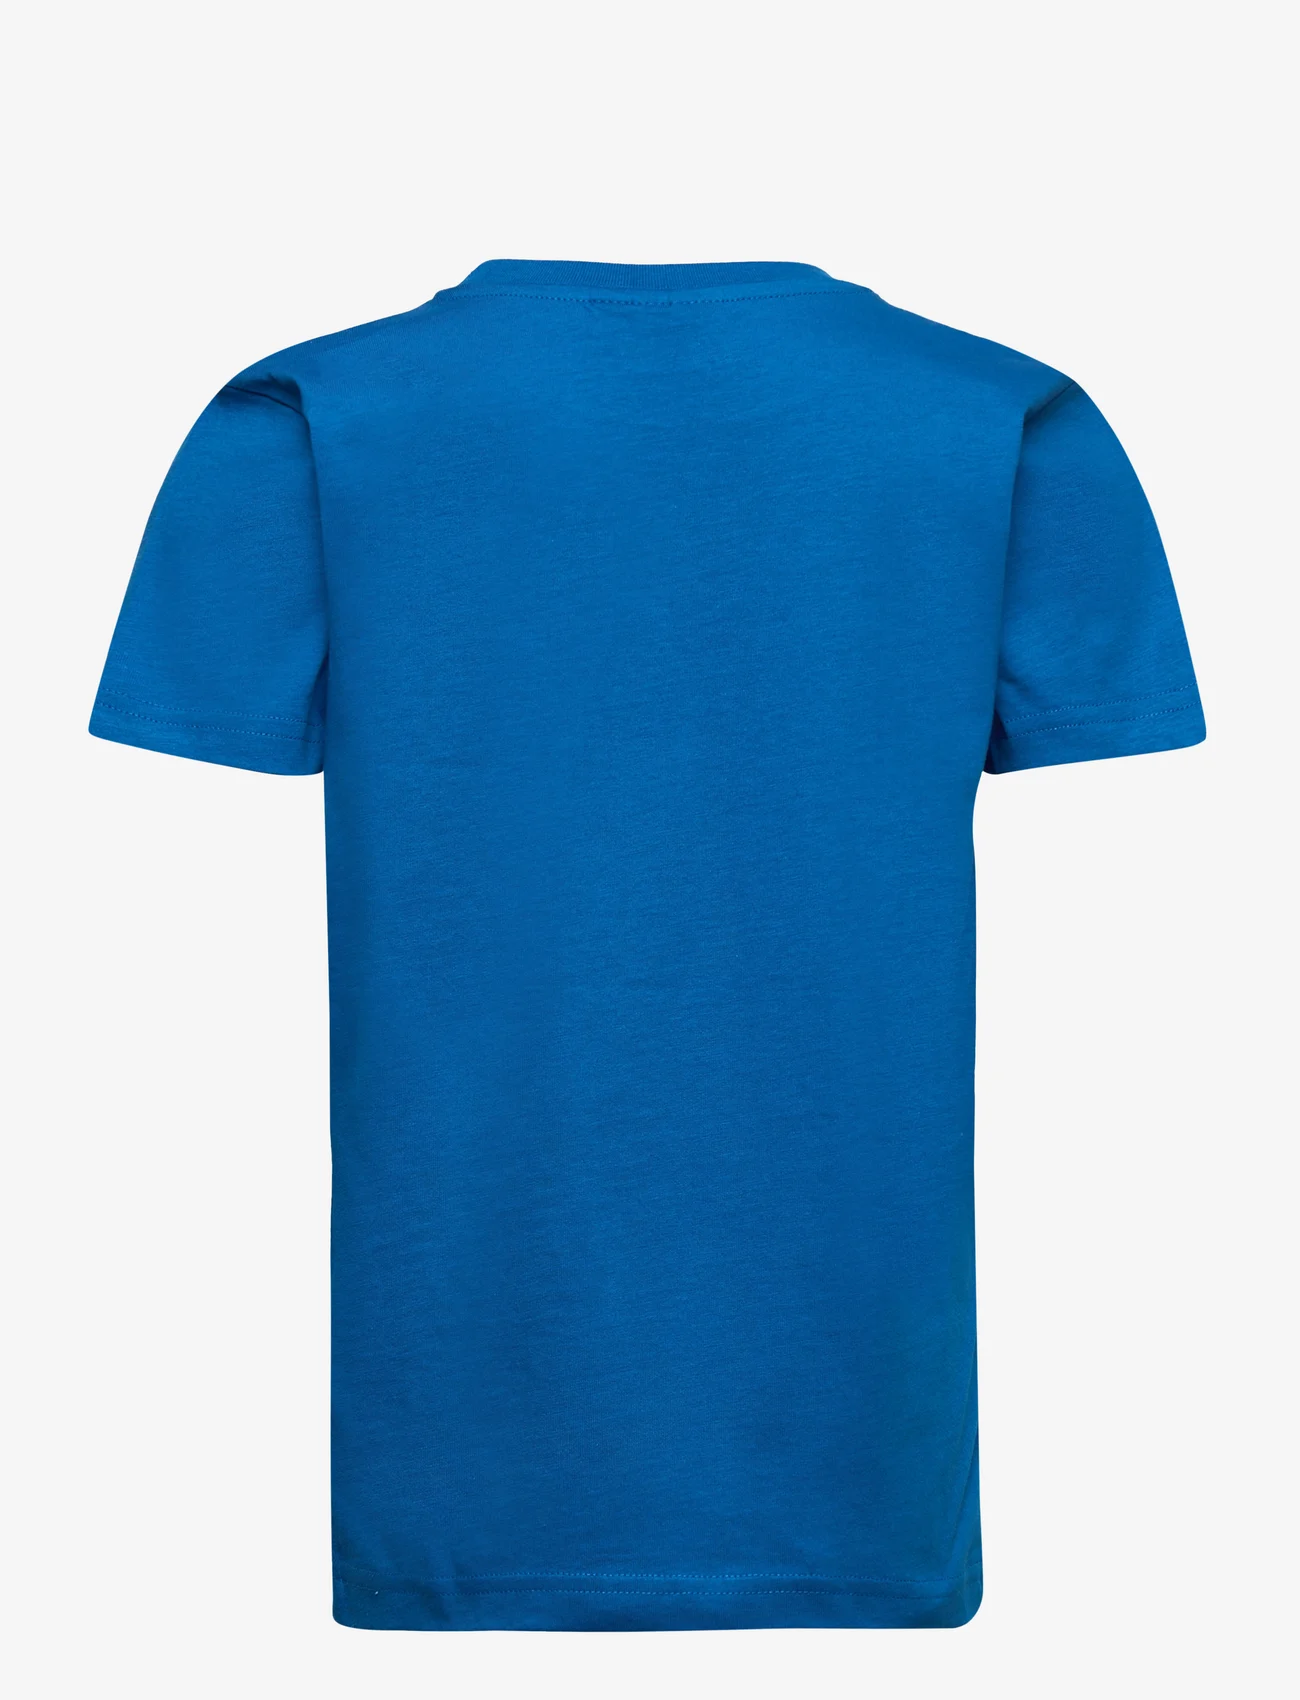 LEGO kidswear - LWTAYLOR 325 - T-SHIRT SS - short-sleeved t-shirts - dark blue - 1